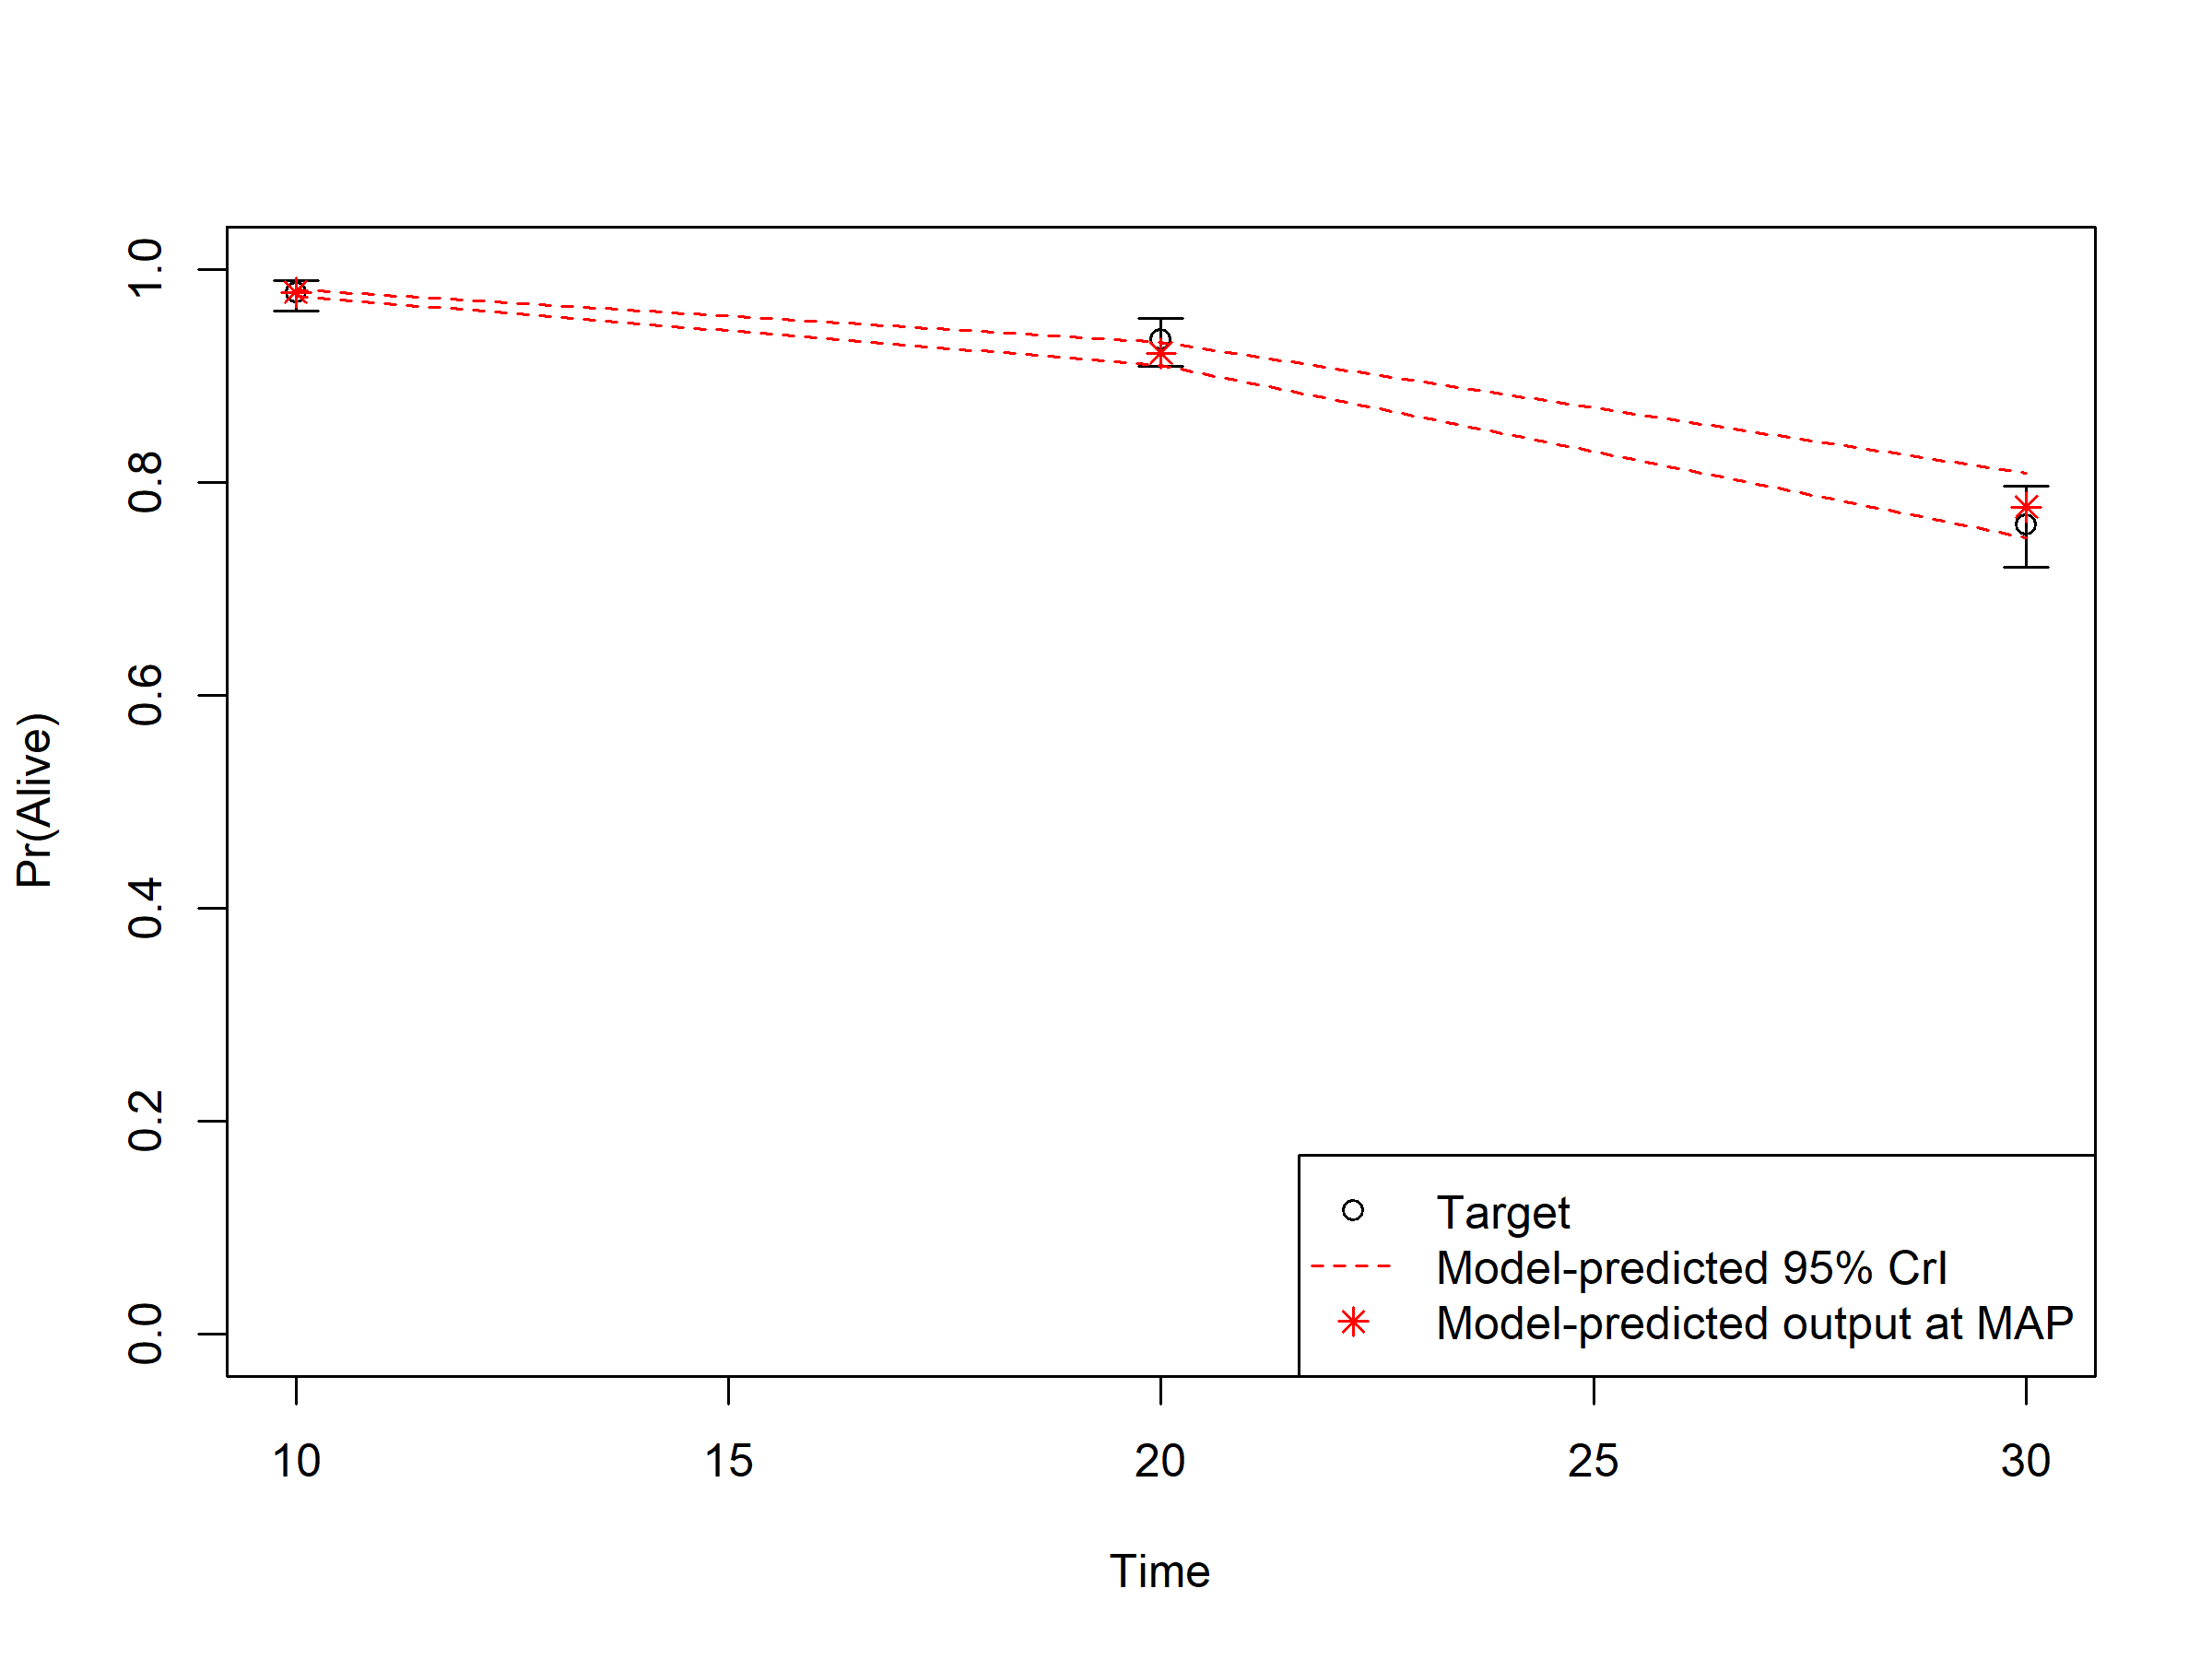 Survival data: Model-predicted outputs vs targets.